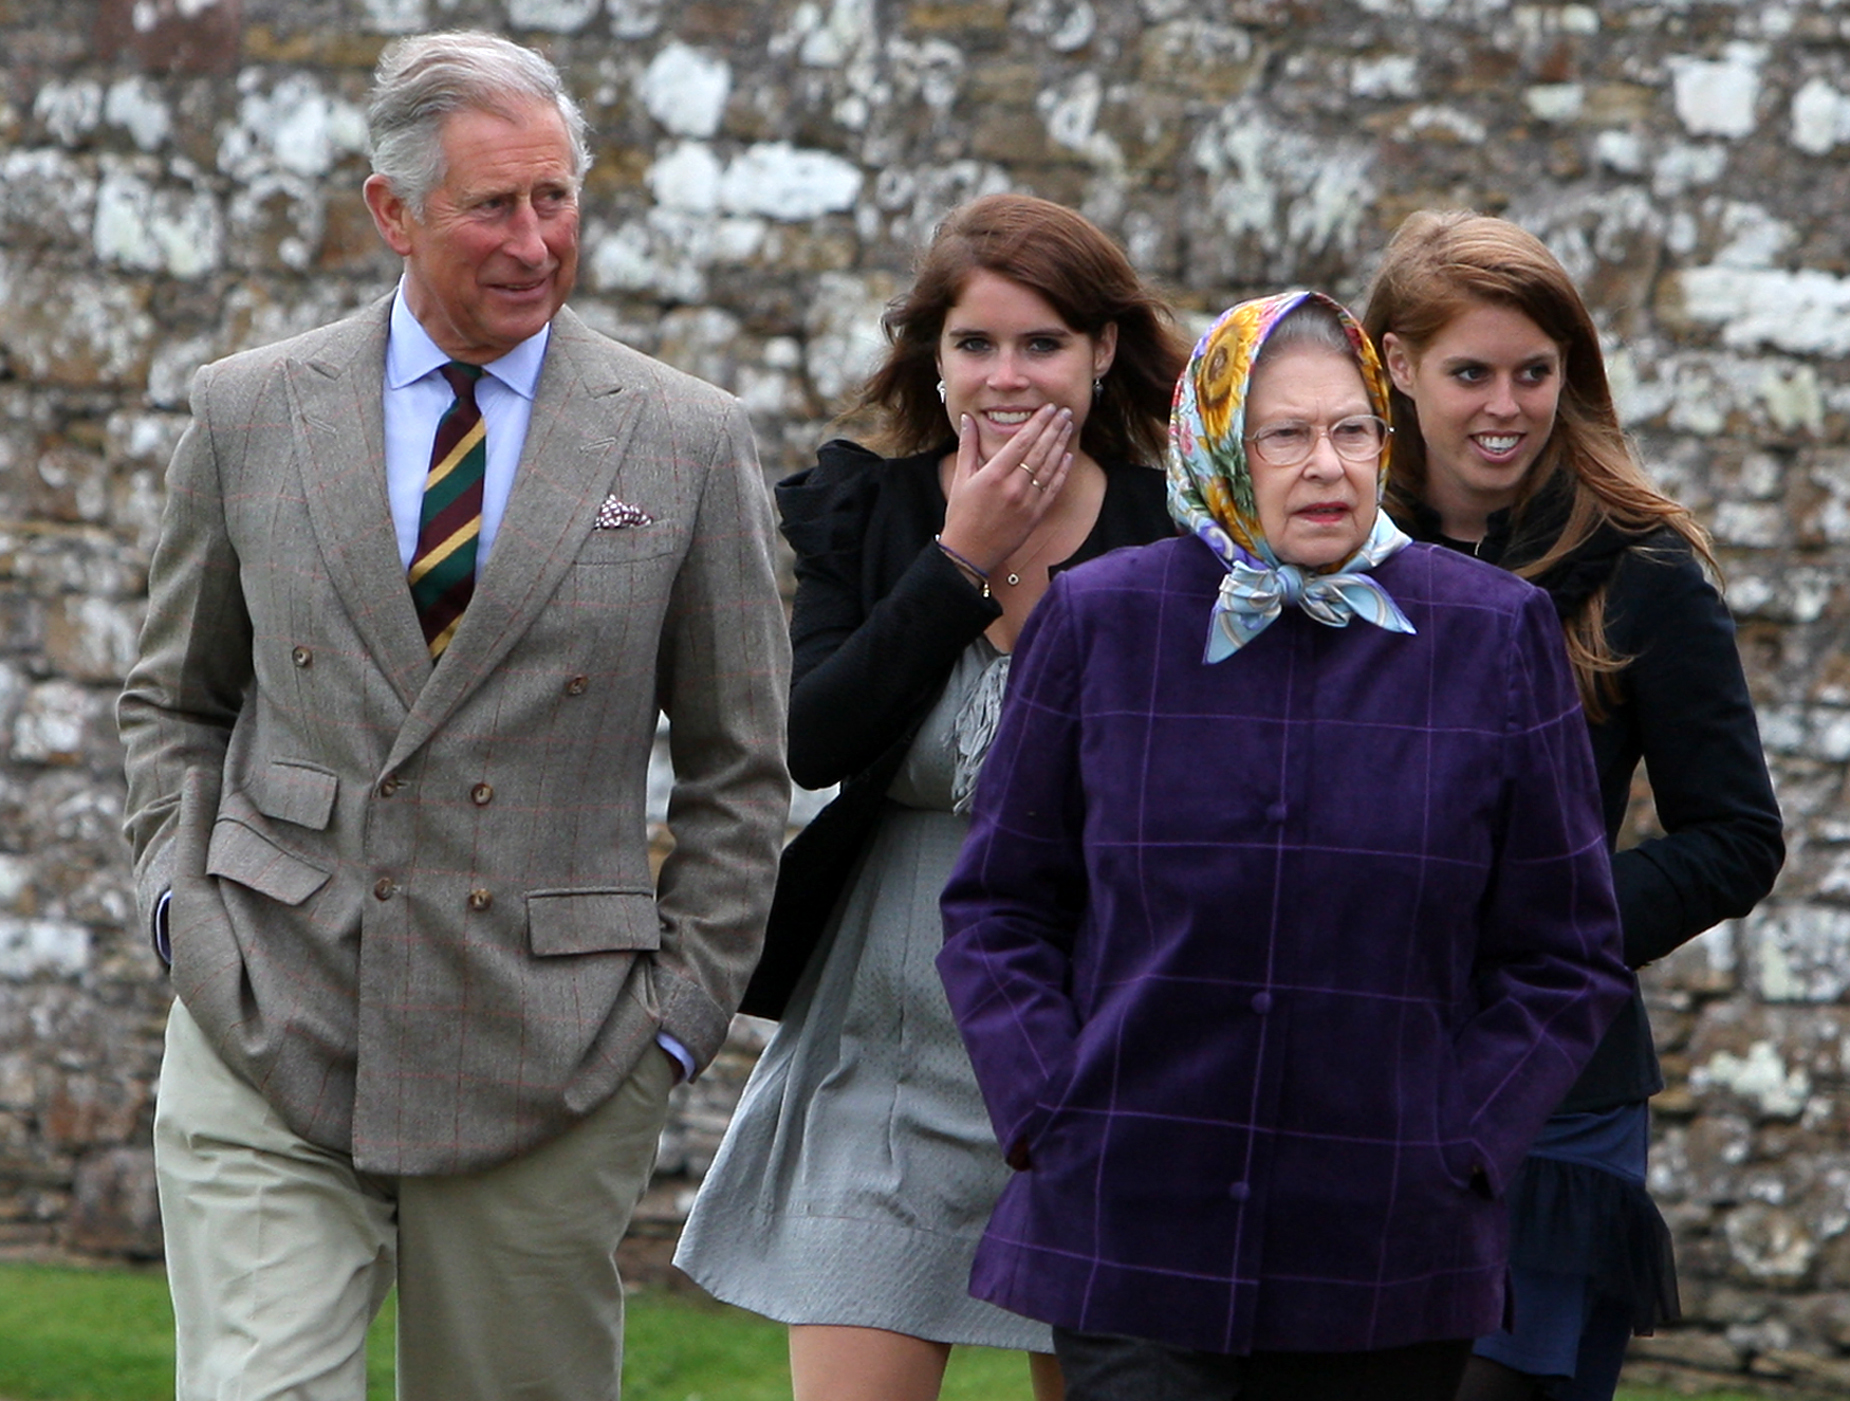 Queen Elizabeth II, Prince Charles, Princess Eugenie, and Princess Beatrice